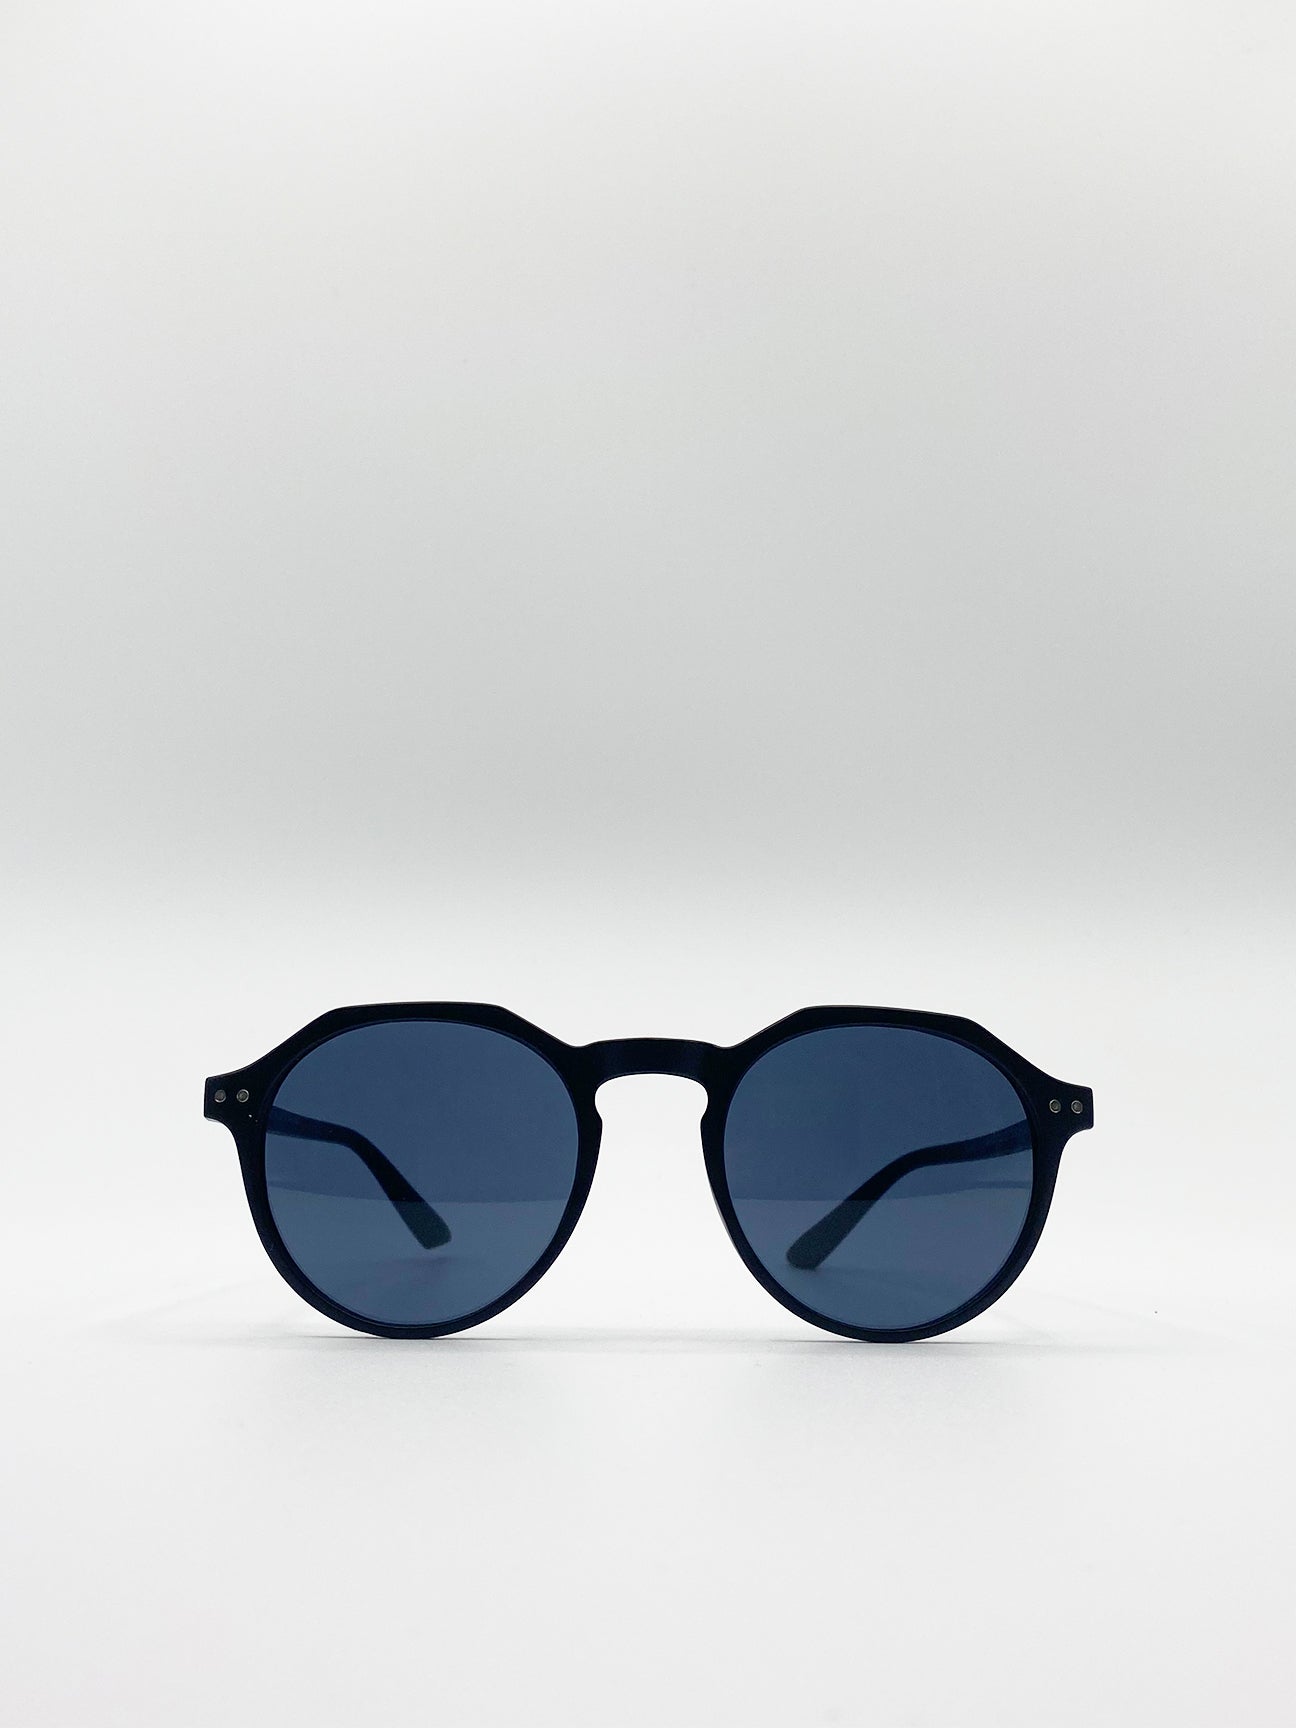 Black Smoke Lense Classic Preppy Sunglasses With Key Hole Nosebridge